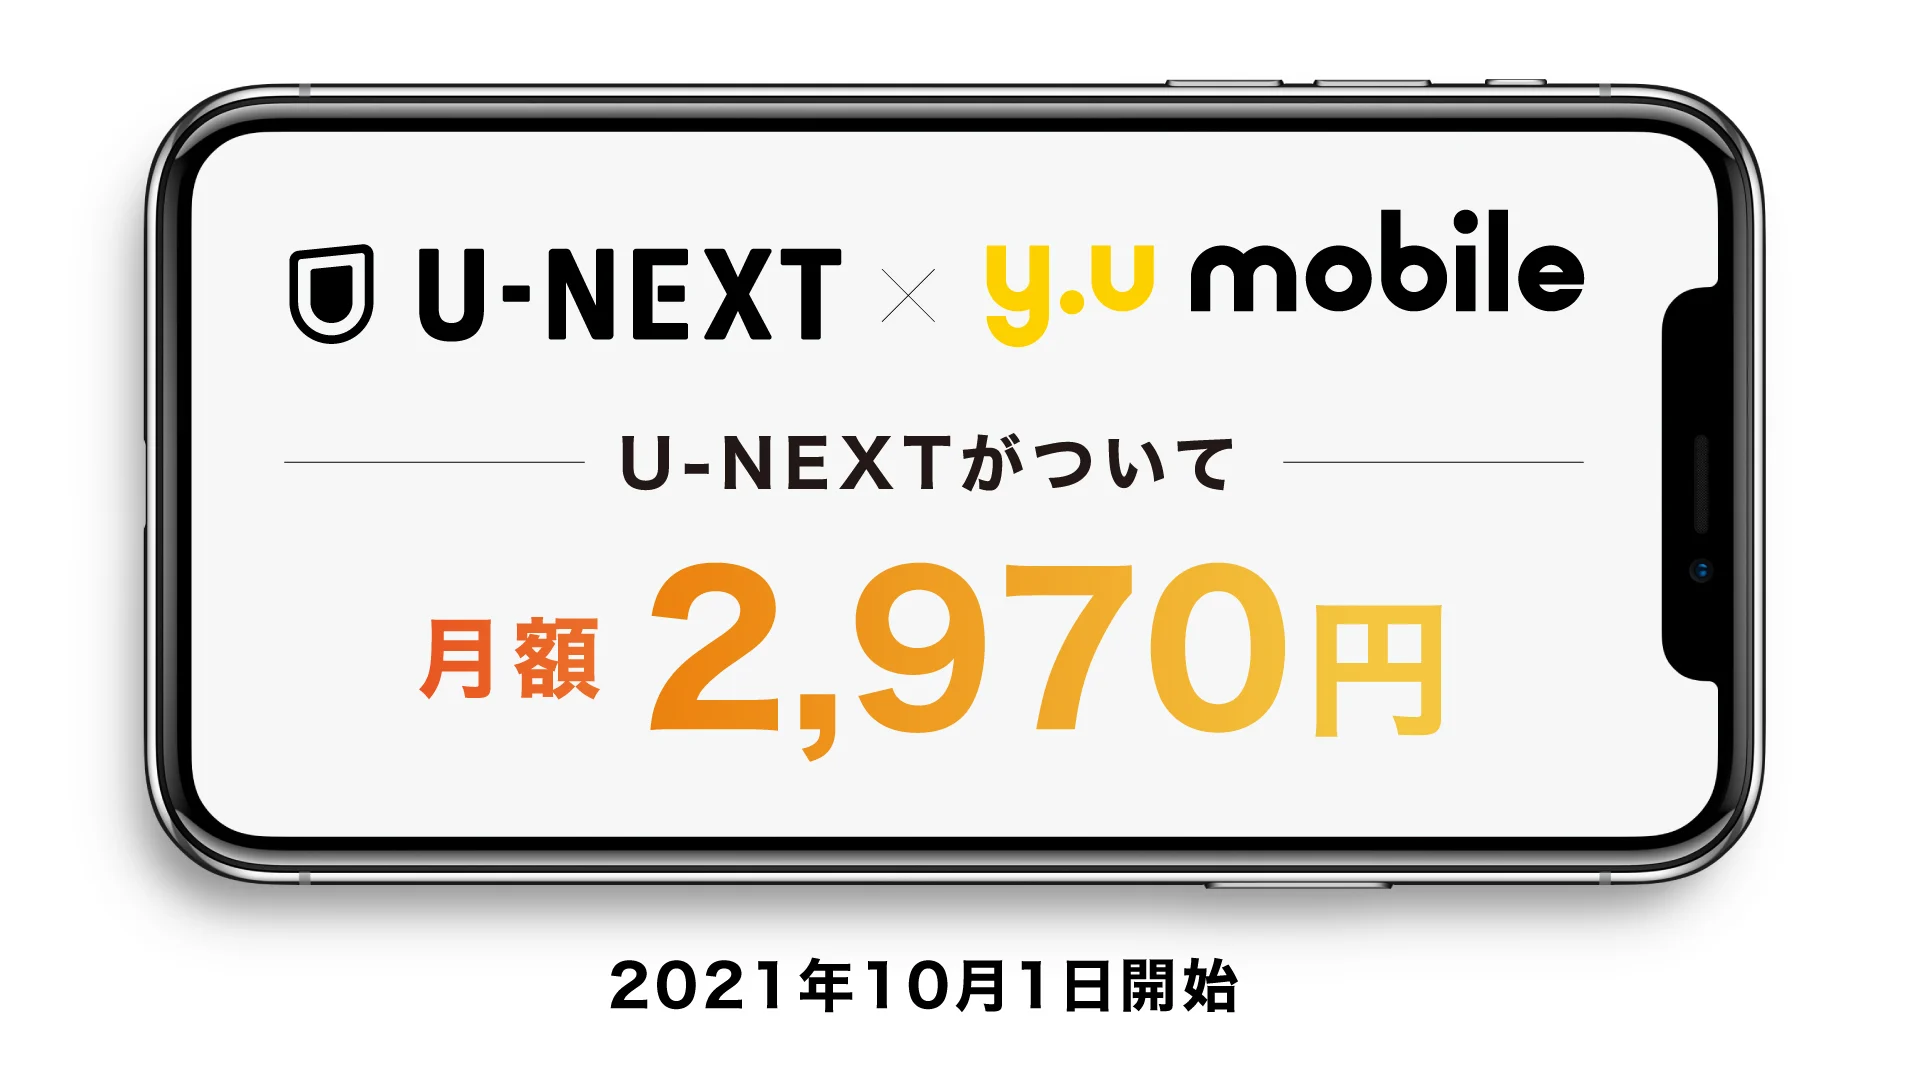 y.u mobile「シングル U-NEXT」プラン